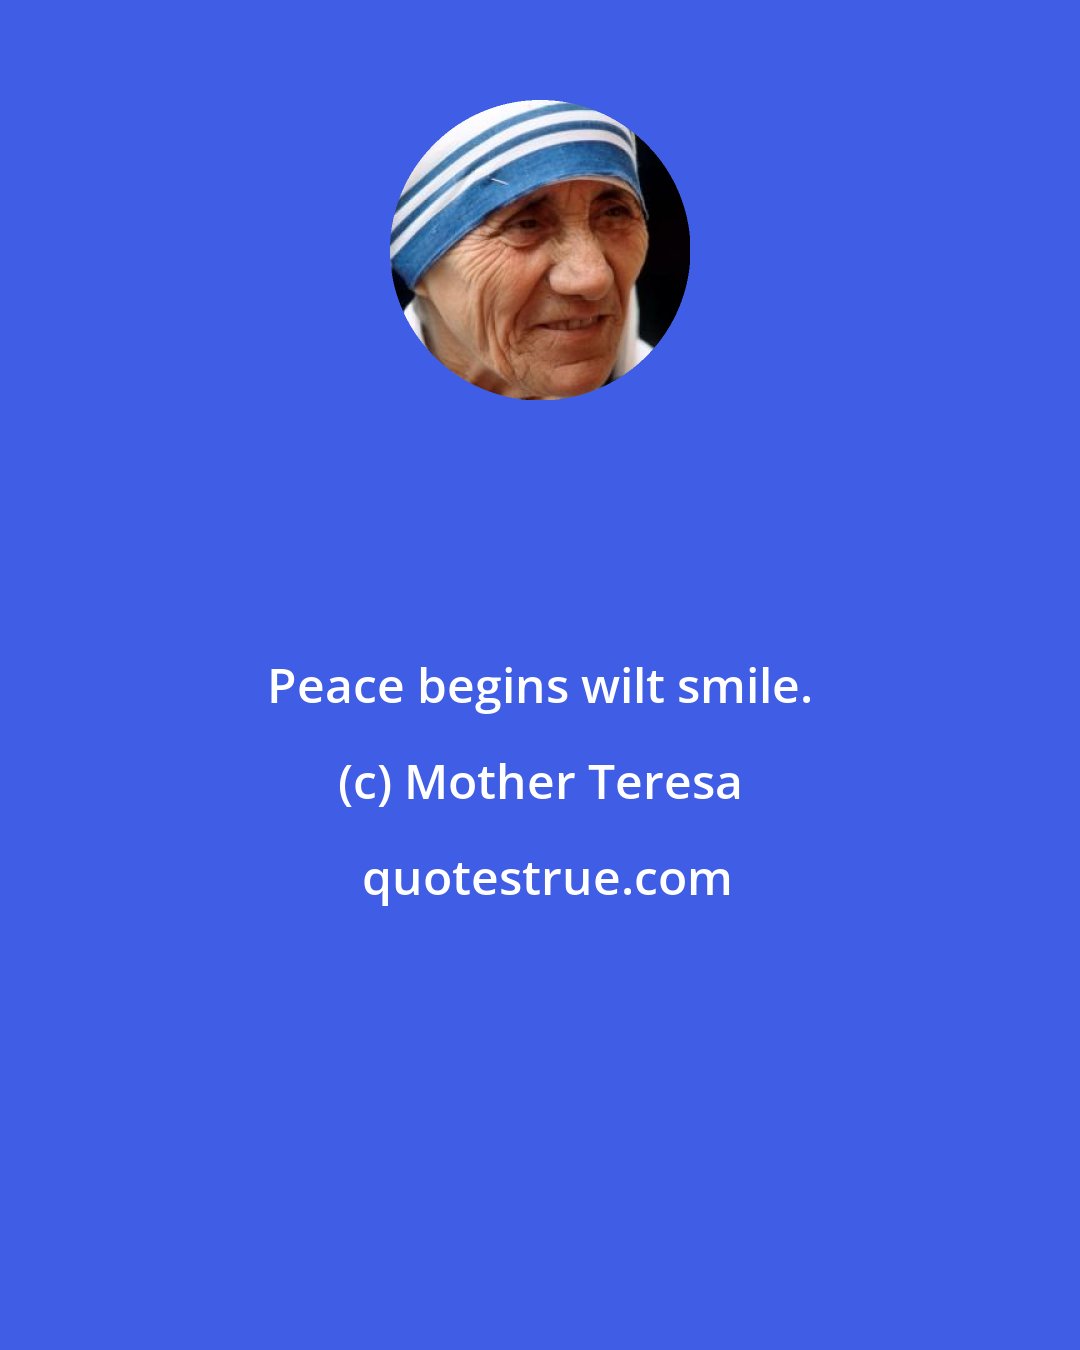 Mother Teresa: Peace begins wilt smile.